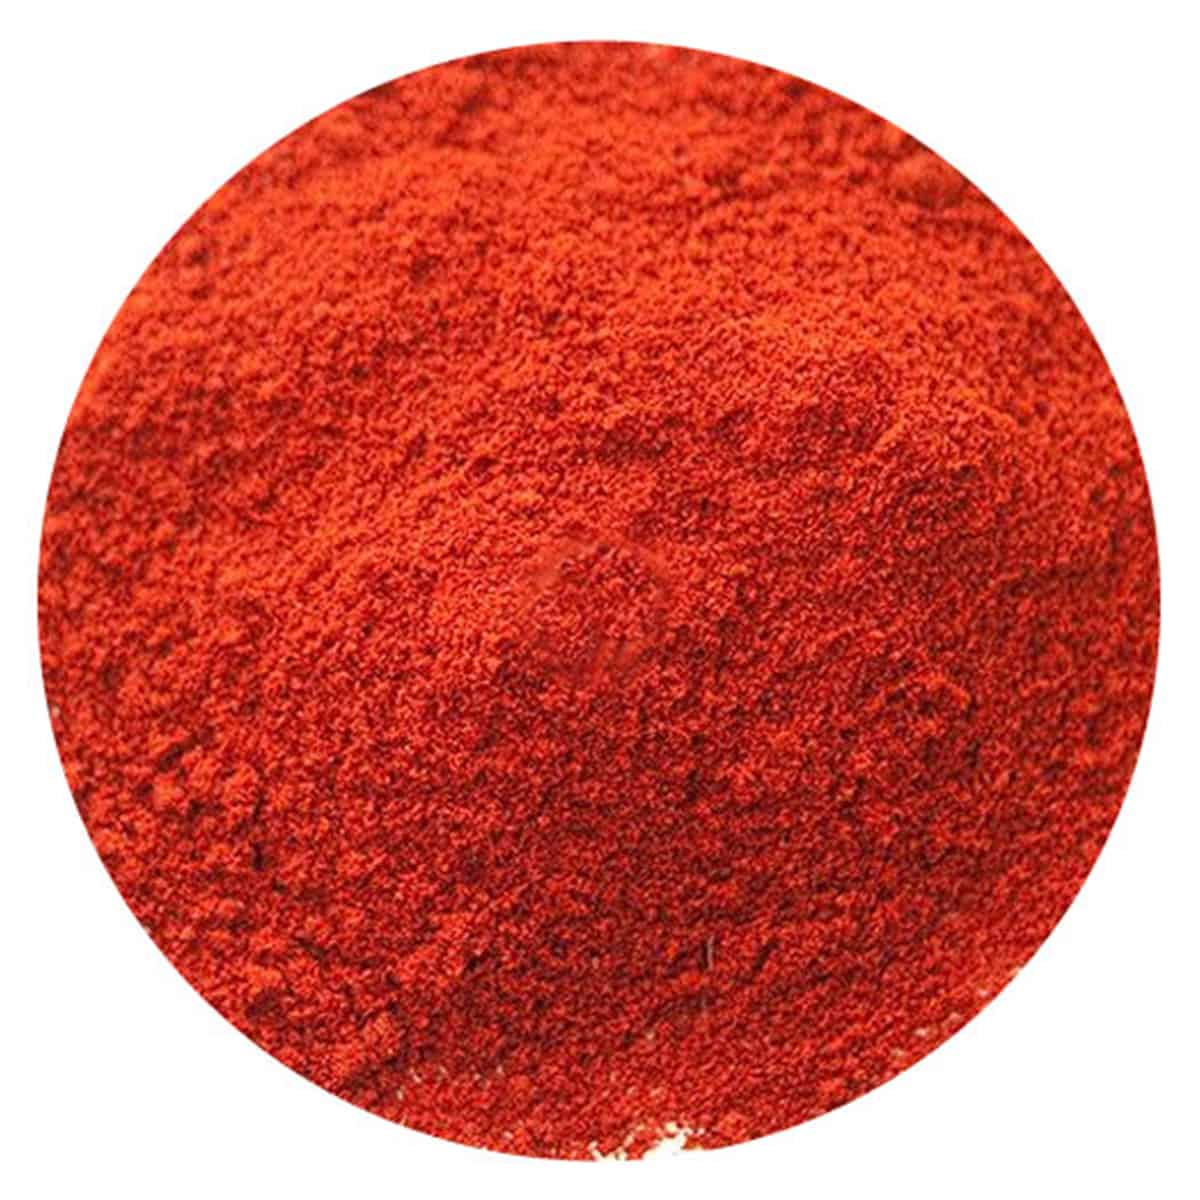 Buy IAG Foods Red Pepper Powder (Chilli Powder) - 1 kg